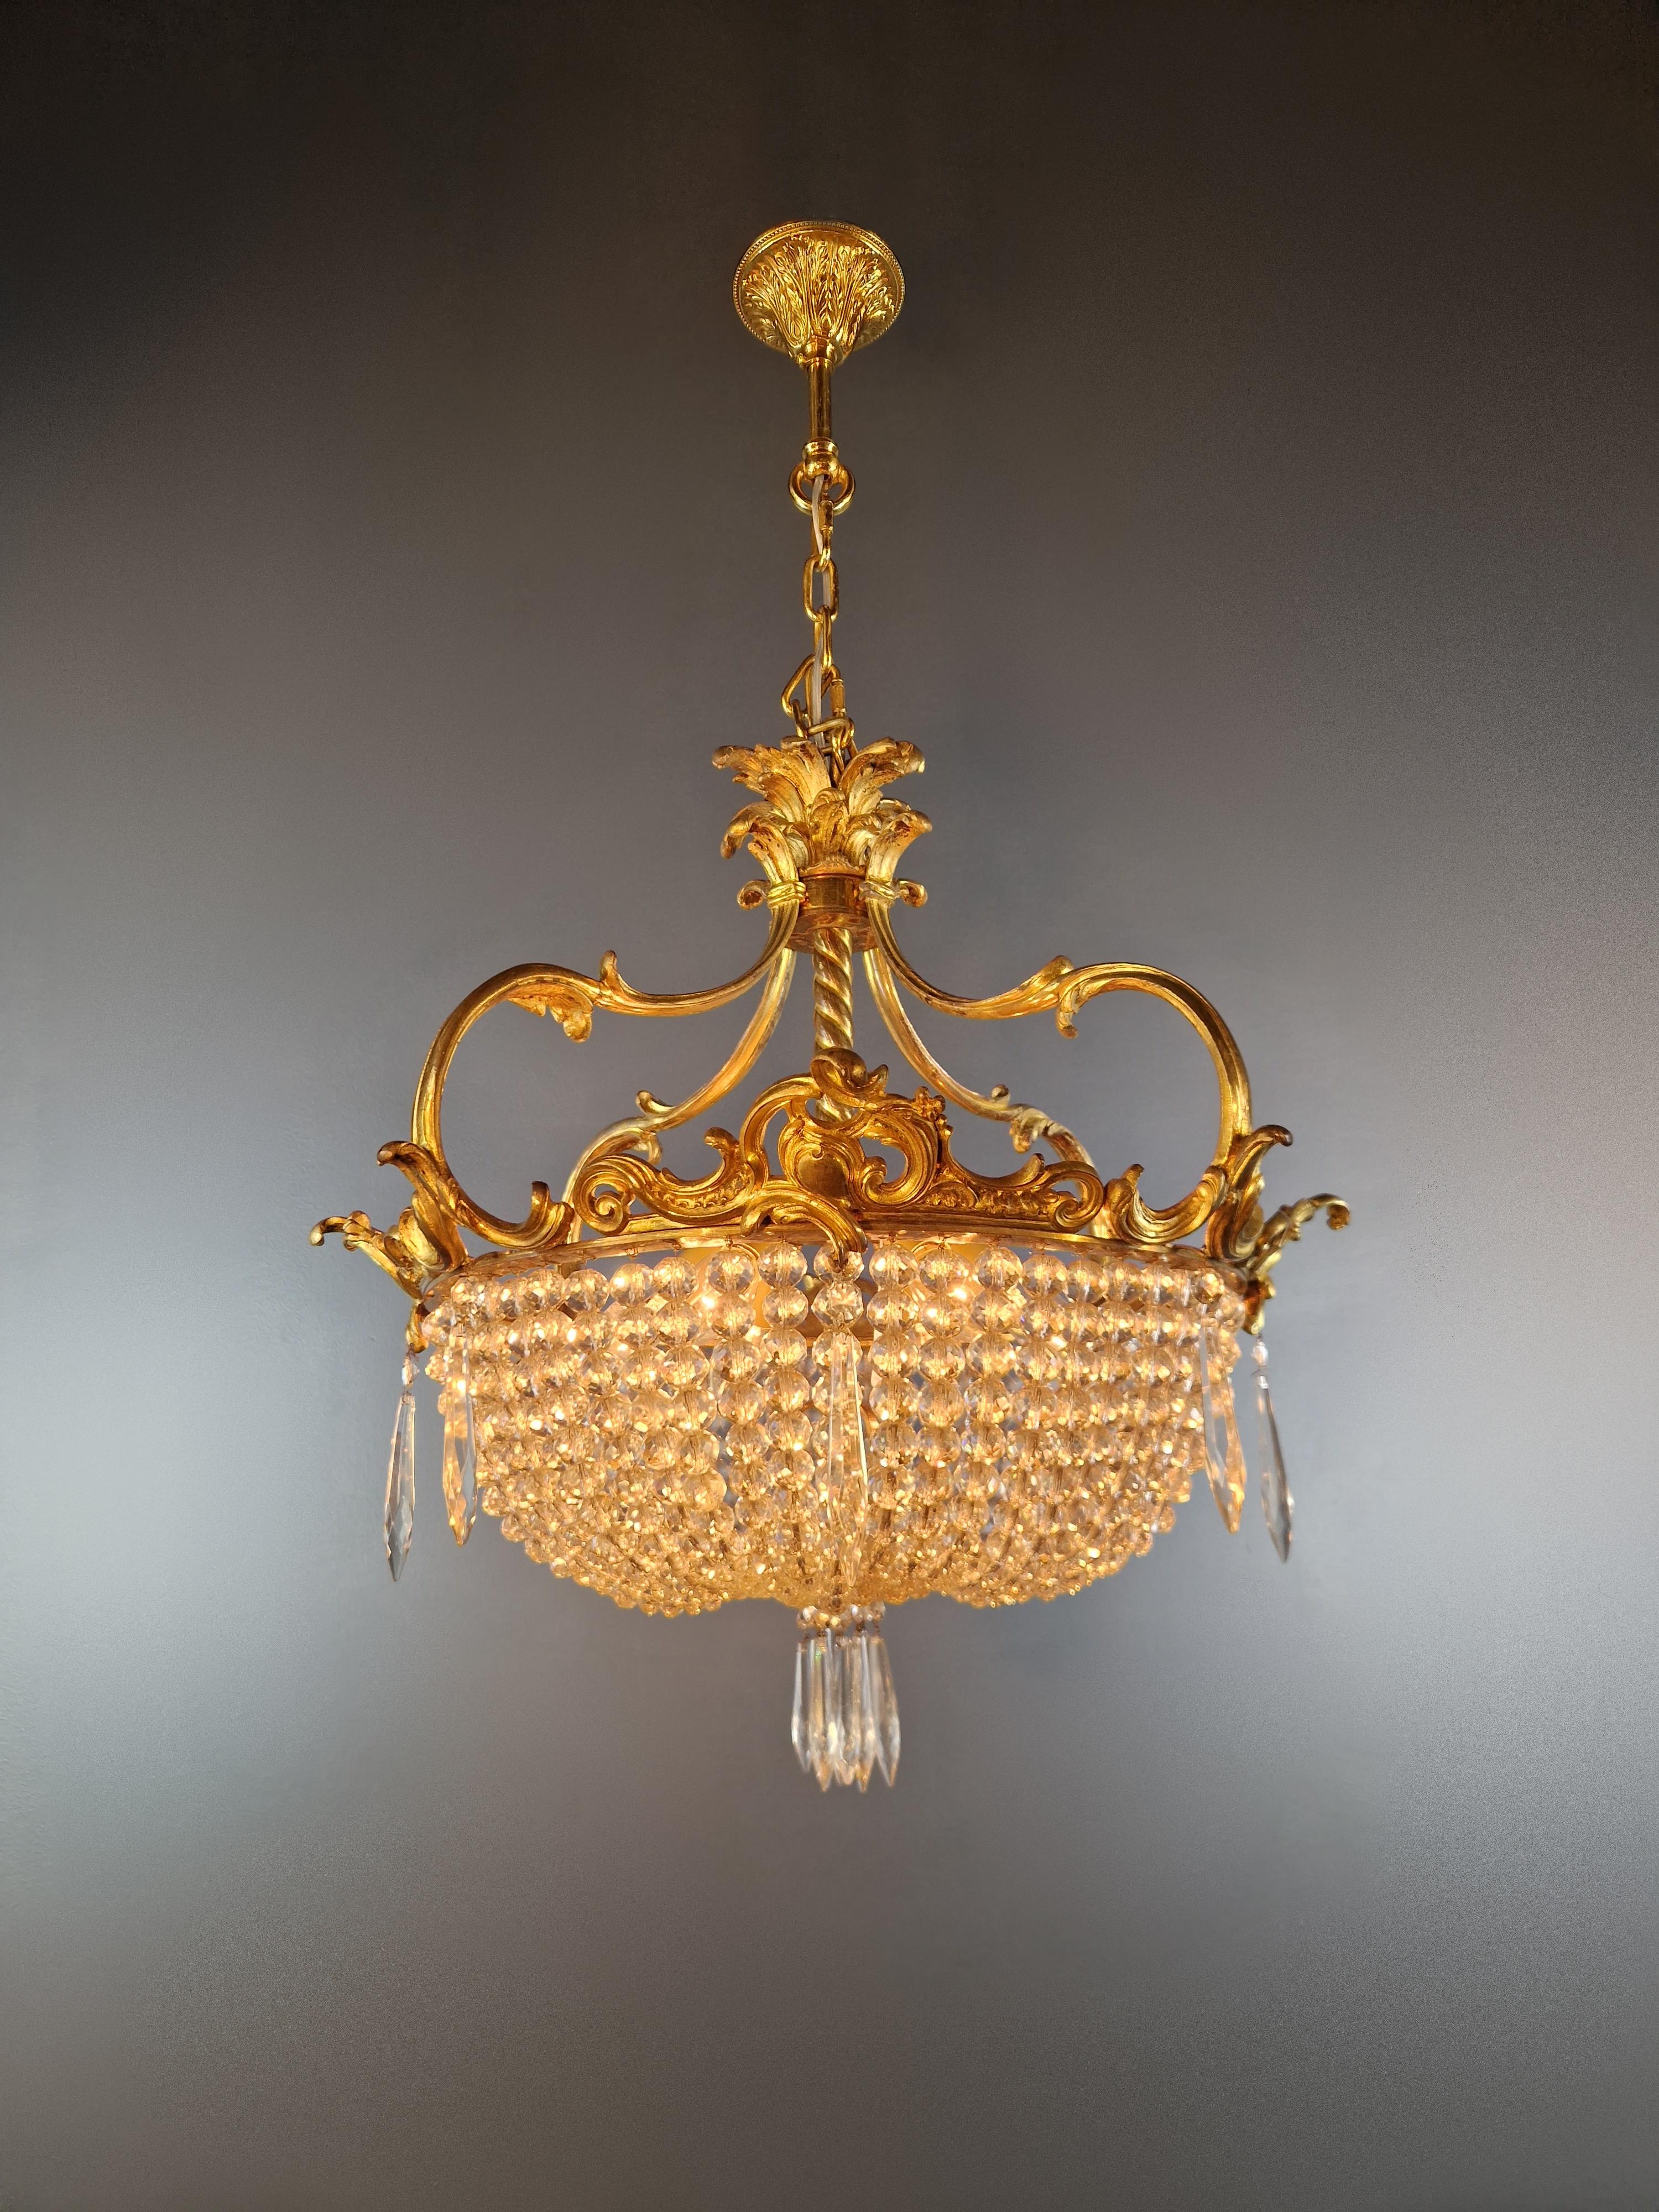 Art Nouveau Messing Kronleuchter Lüster Deckenlampe Rarität Antike (Handgeknüpft)